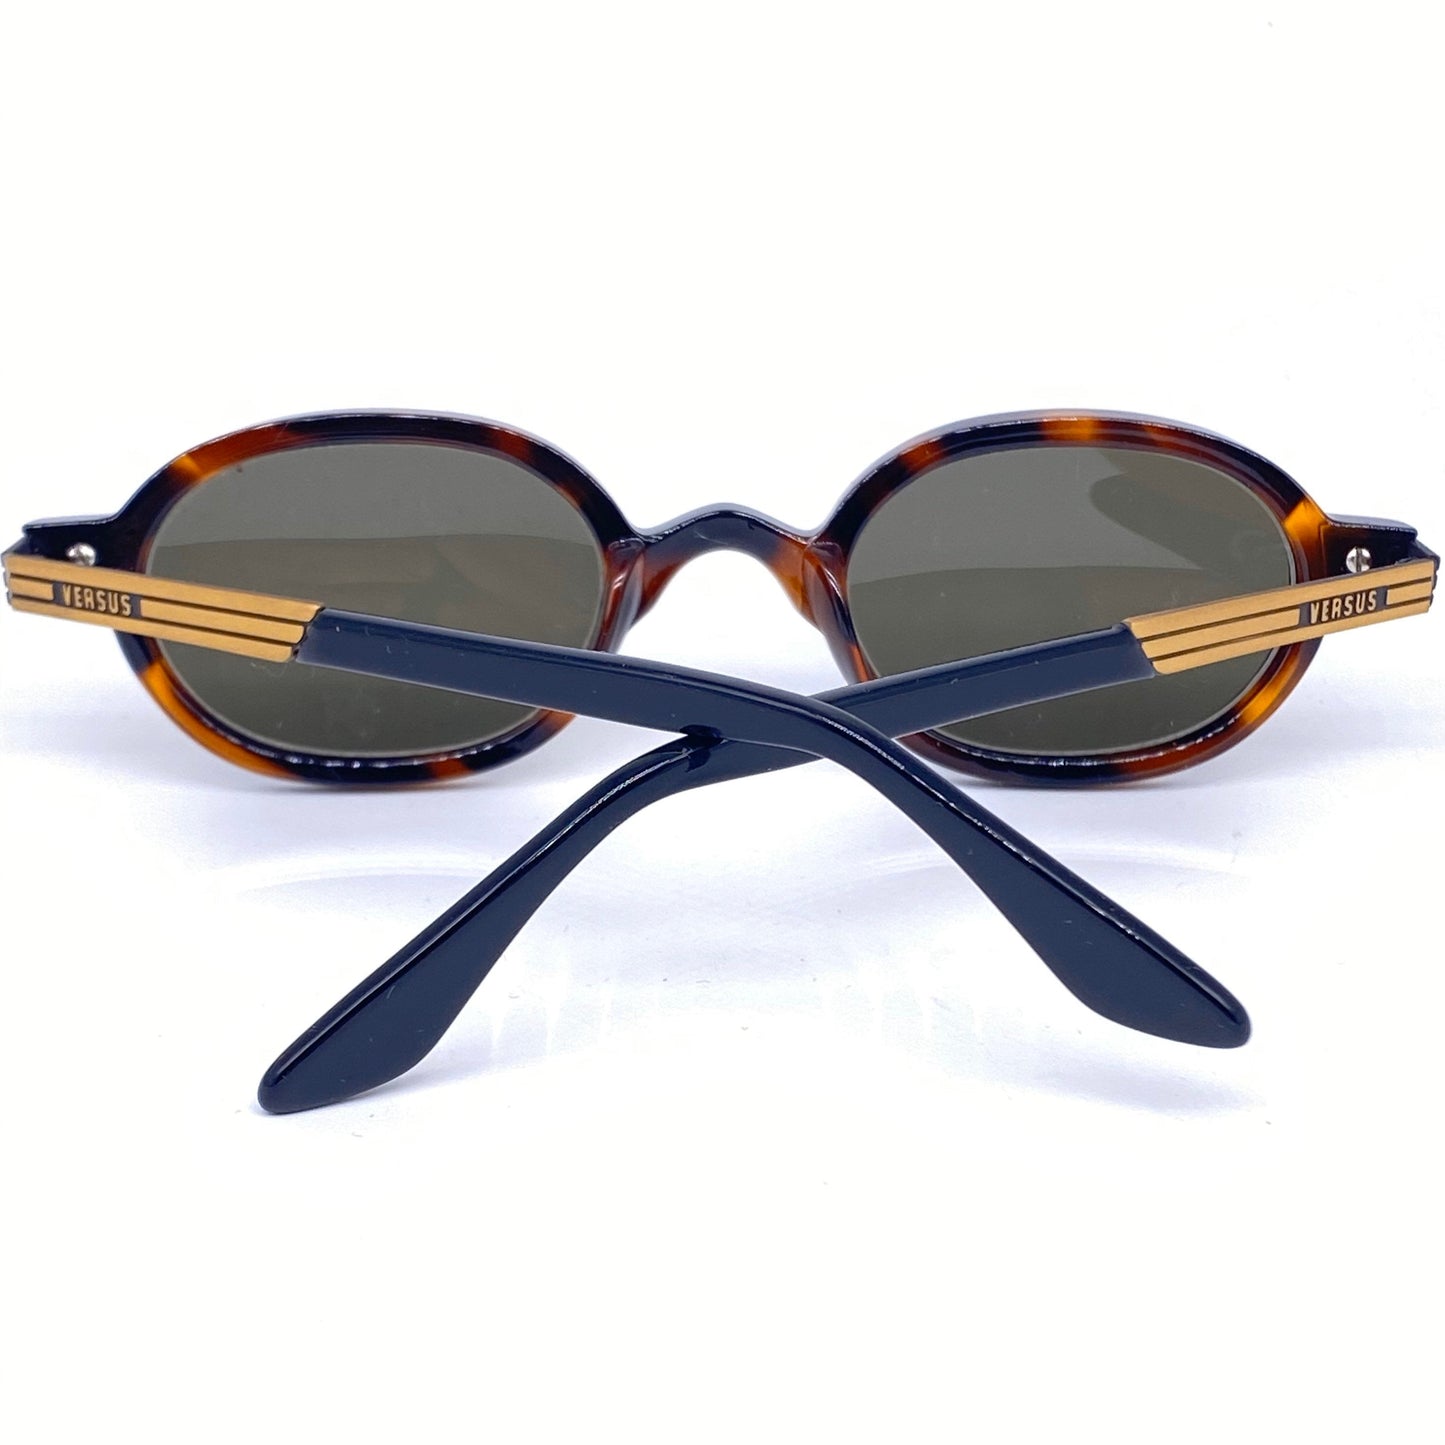 Gianni Versace E-23 retro oval tortoise sunglasses, 90s NOS